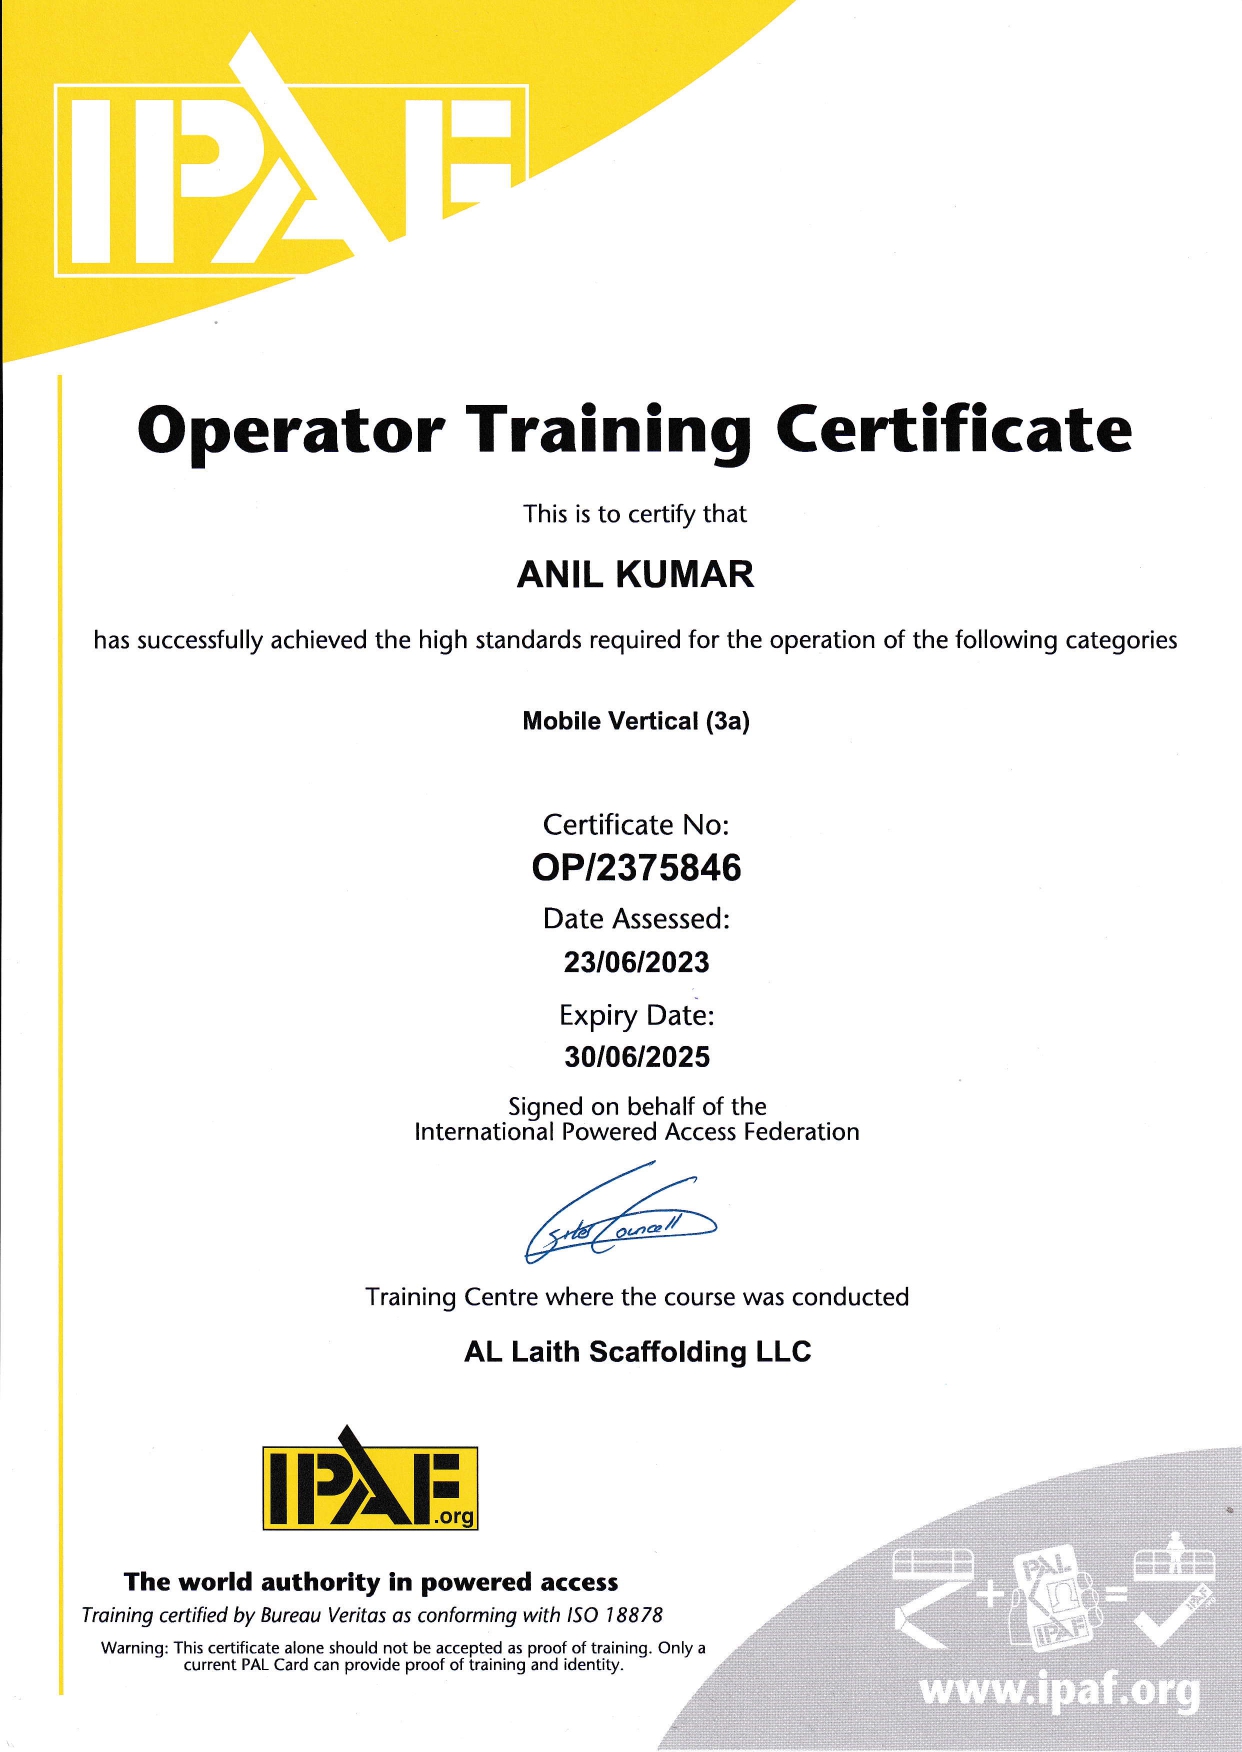 ipaf_training_certificate-3